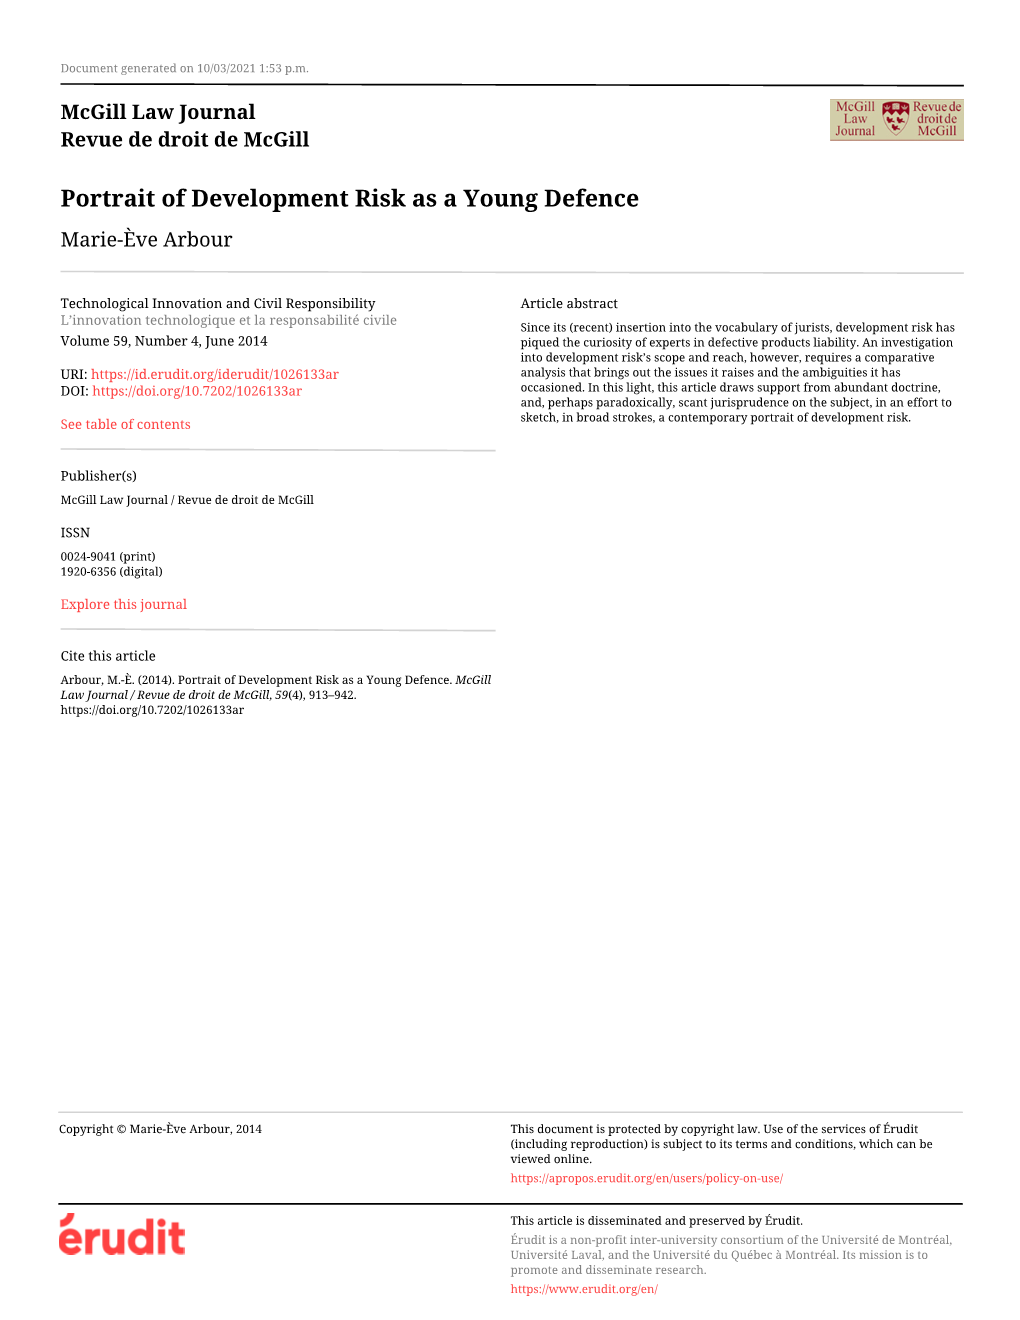 Portrait of Development Risk As a Young Defence Marie-Ève Arbour